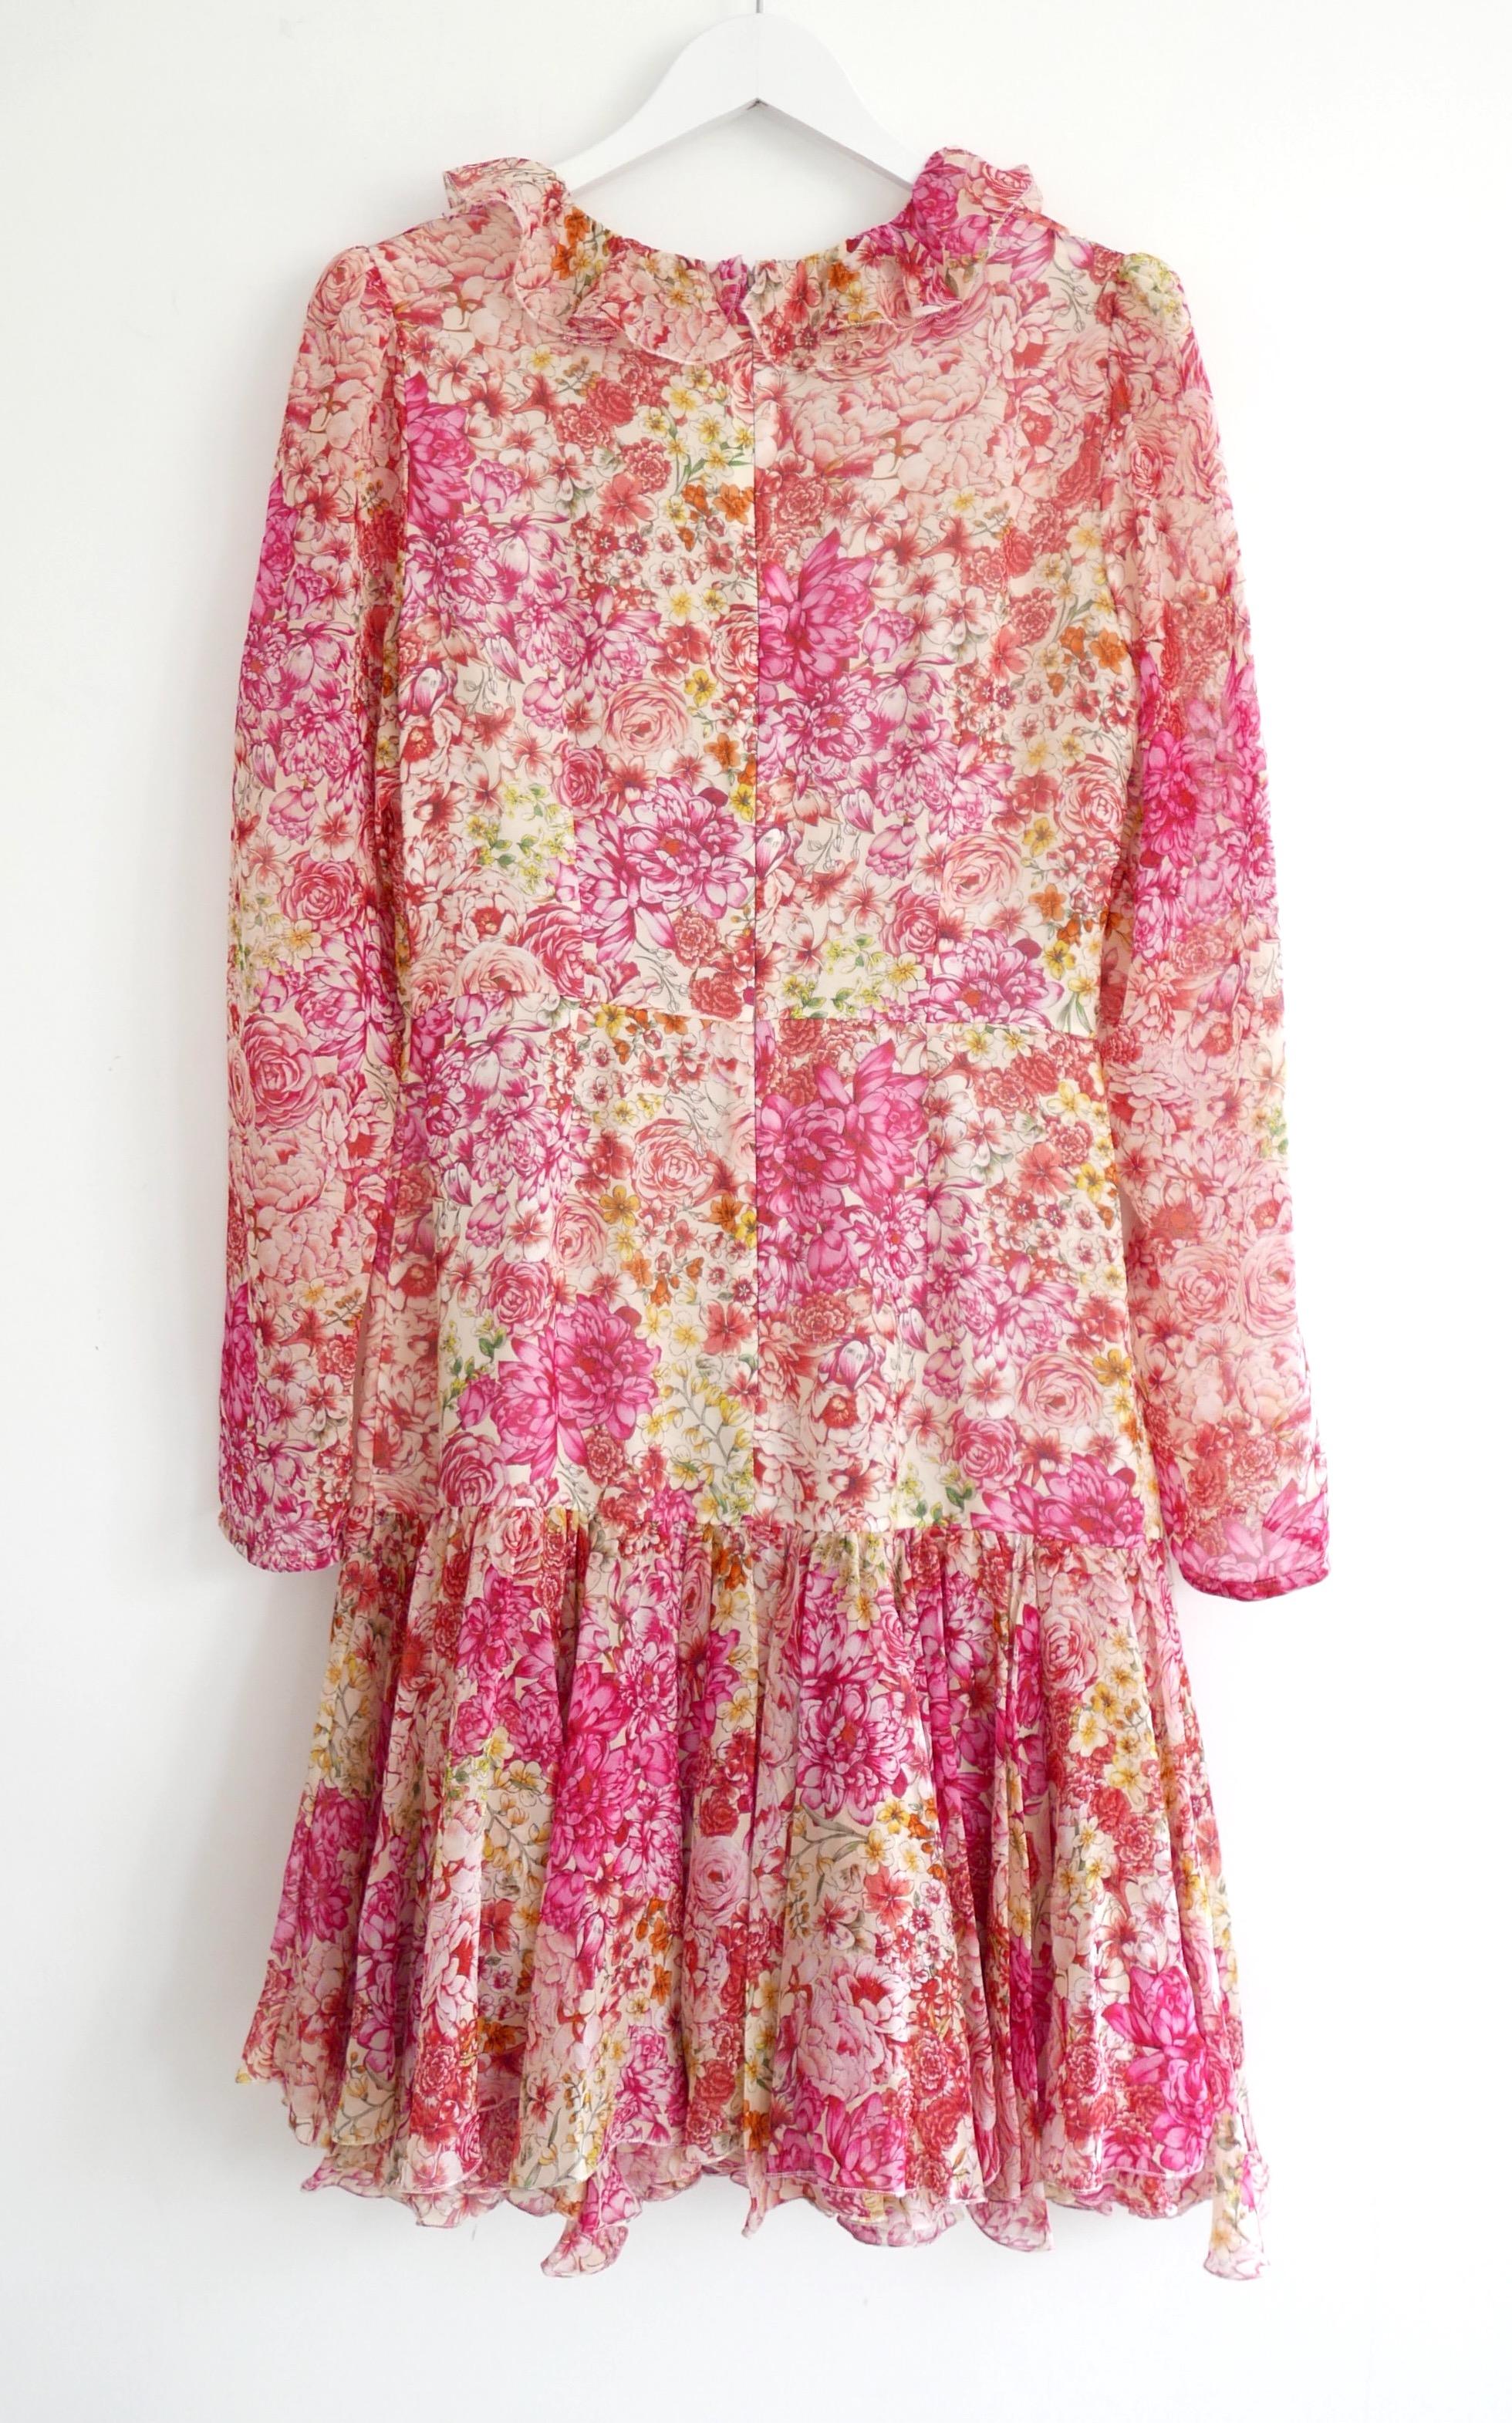 Giambattista Valli Spring 2019  Floral Silk Dress  For Sale 1